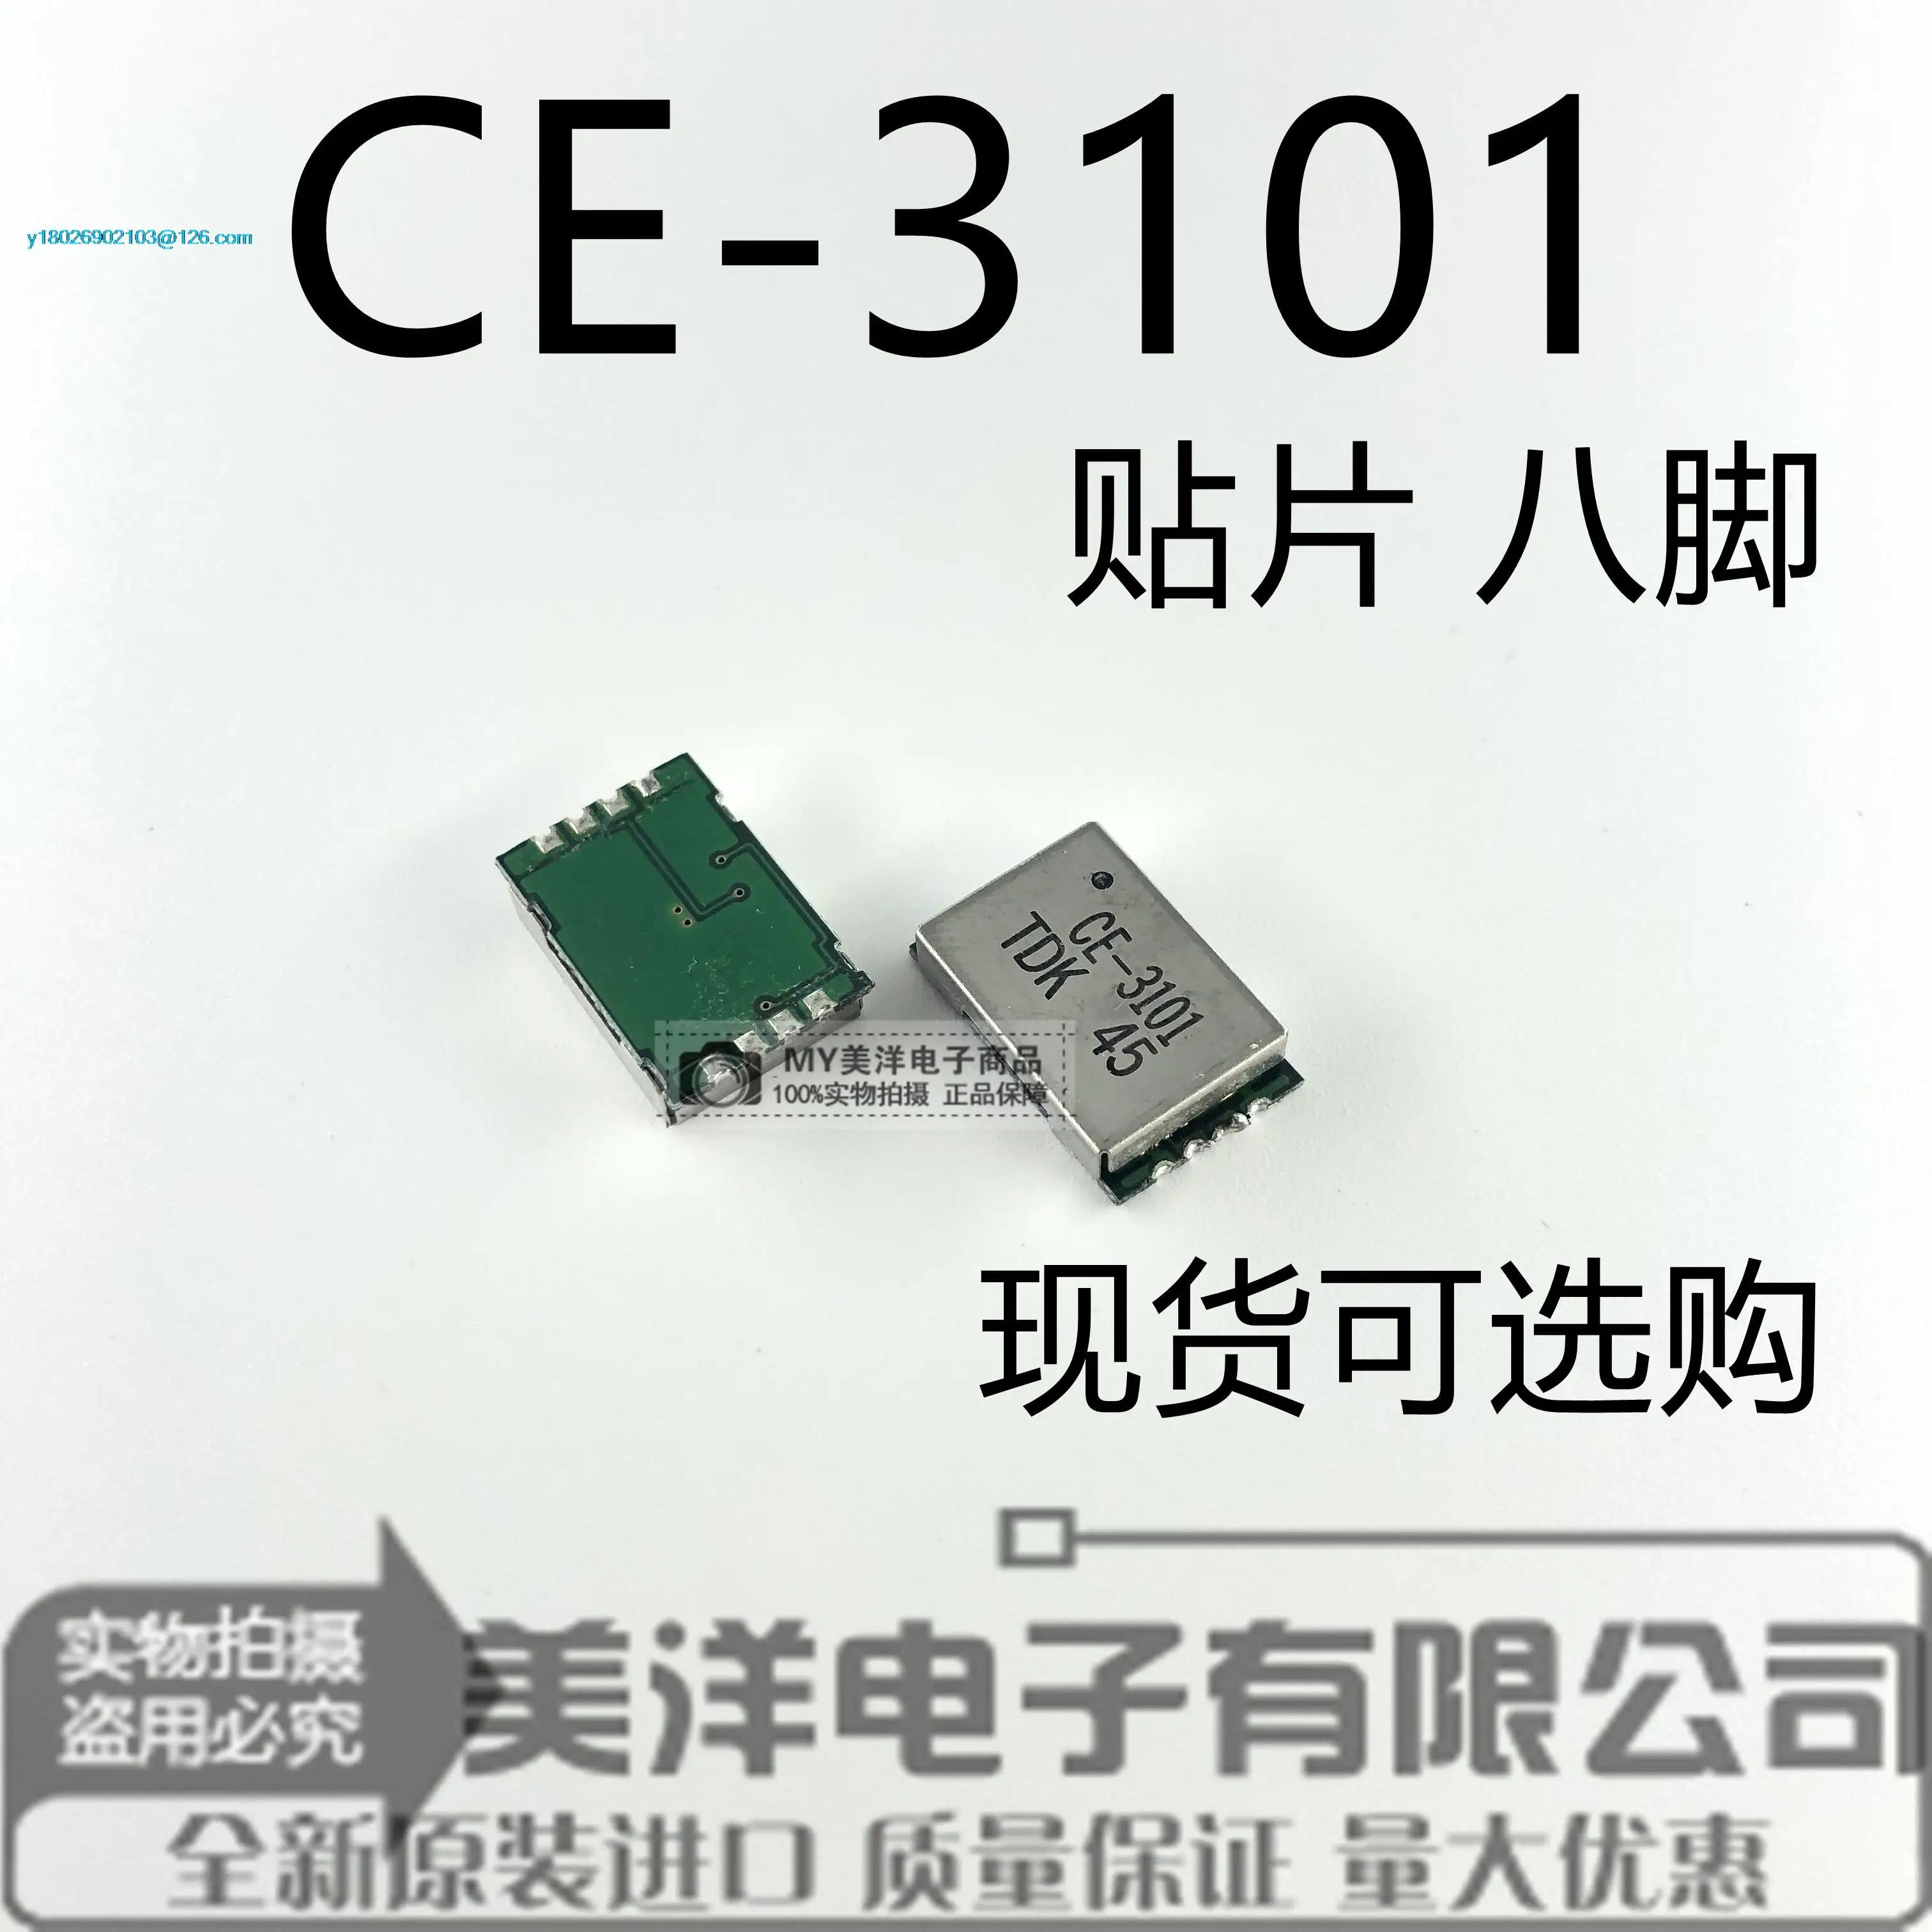 CE-3101 CE-3101-T 81.2WDC   ġ Ĩ IC